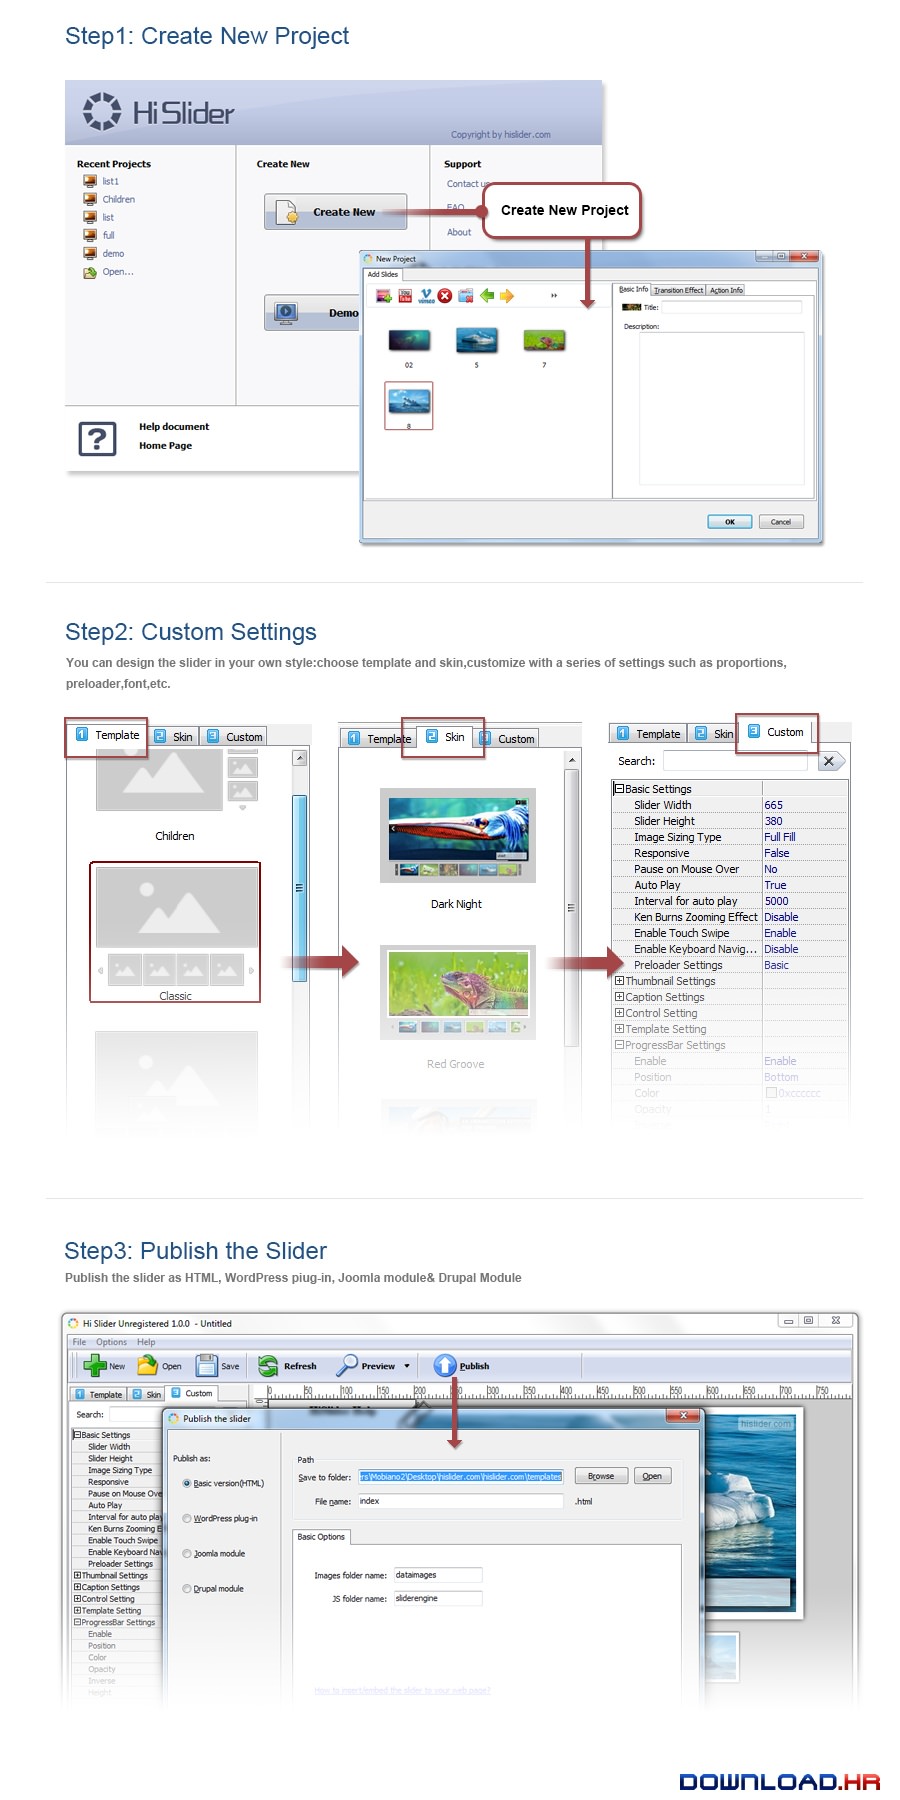 Free WordPress Slider Plugin 2.0 2.0 Featured Image for Version 2.0